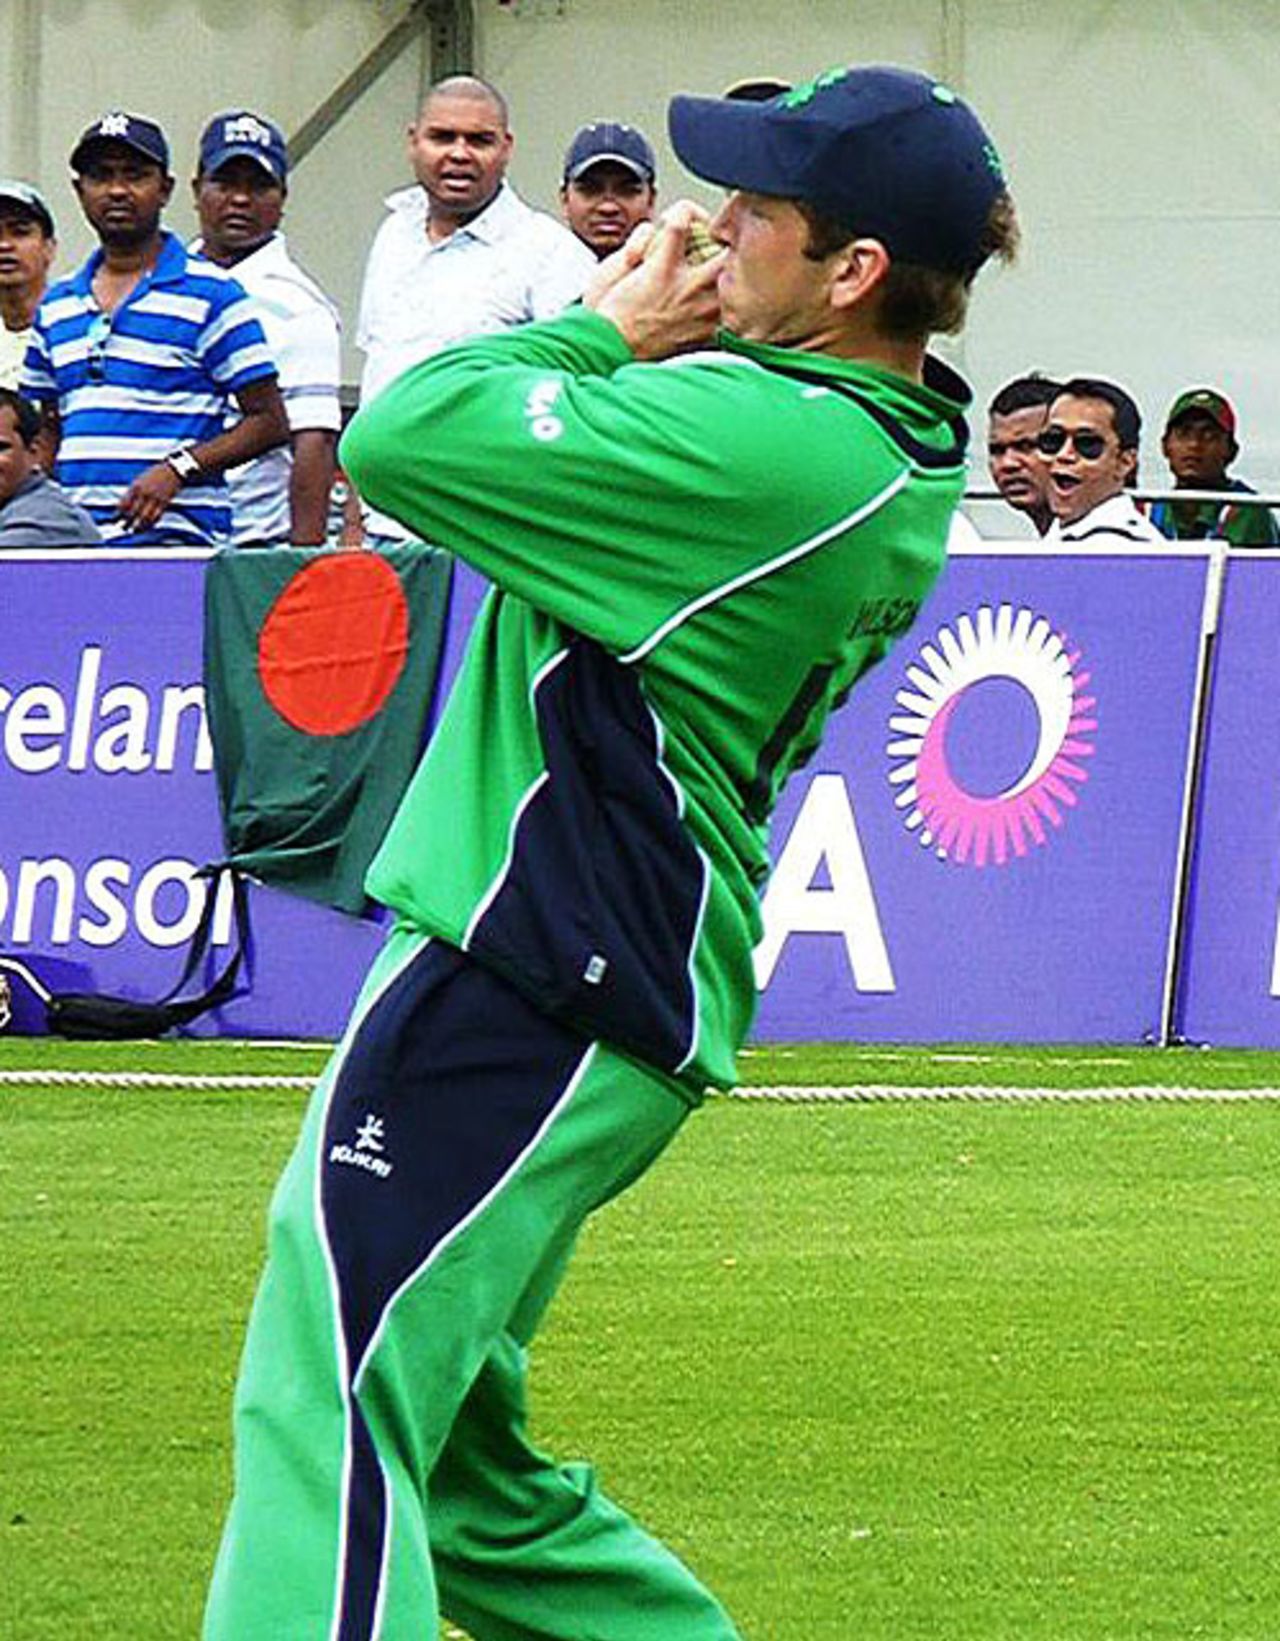 Gary Wilson takes the catch to get rid of Shakib Al Hasan, Ireland v Bangladesh, 1st ODI, Belfast, July 15, 2010